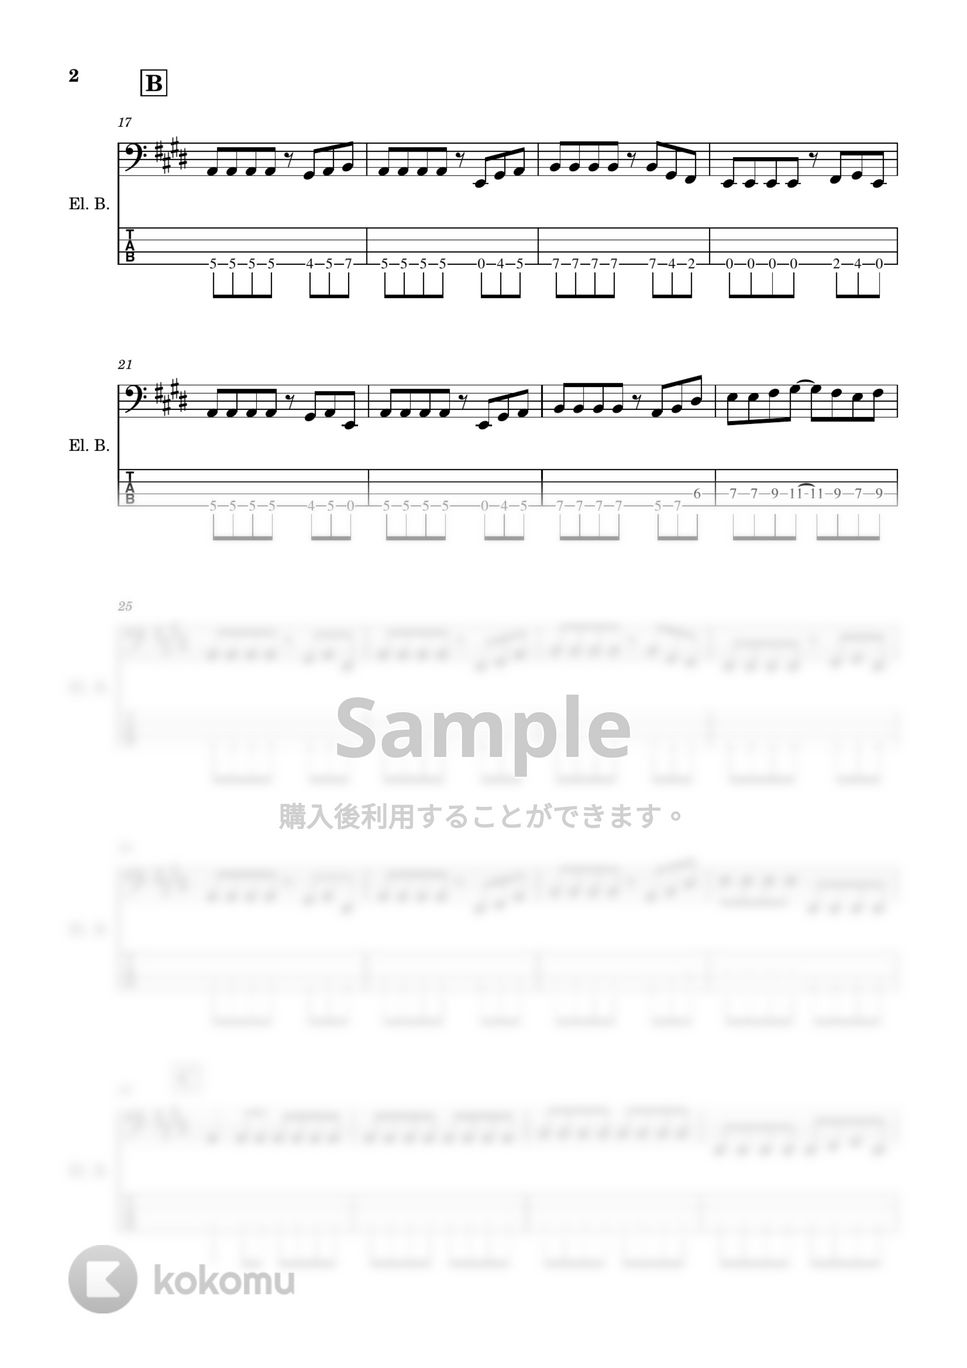 ASIAN KUNG-FU GENERATION - 【ベース楽譜】 リライト / ASIAN KUNG-FU GENERATION - Rewrite / ASIAN KUNG-FU GENERATION 【BassScore】 by Cookie's Drum Score